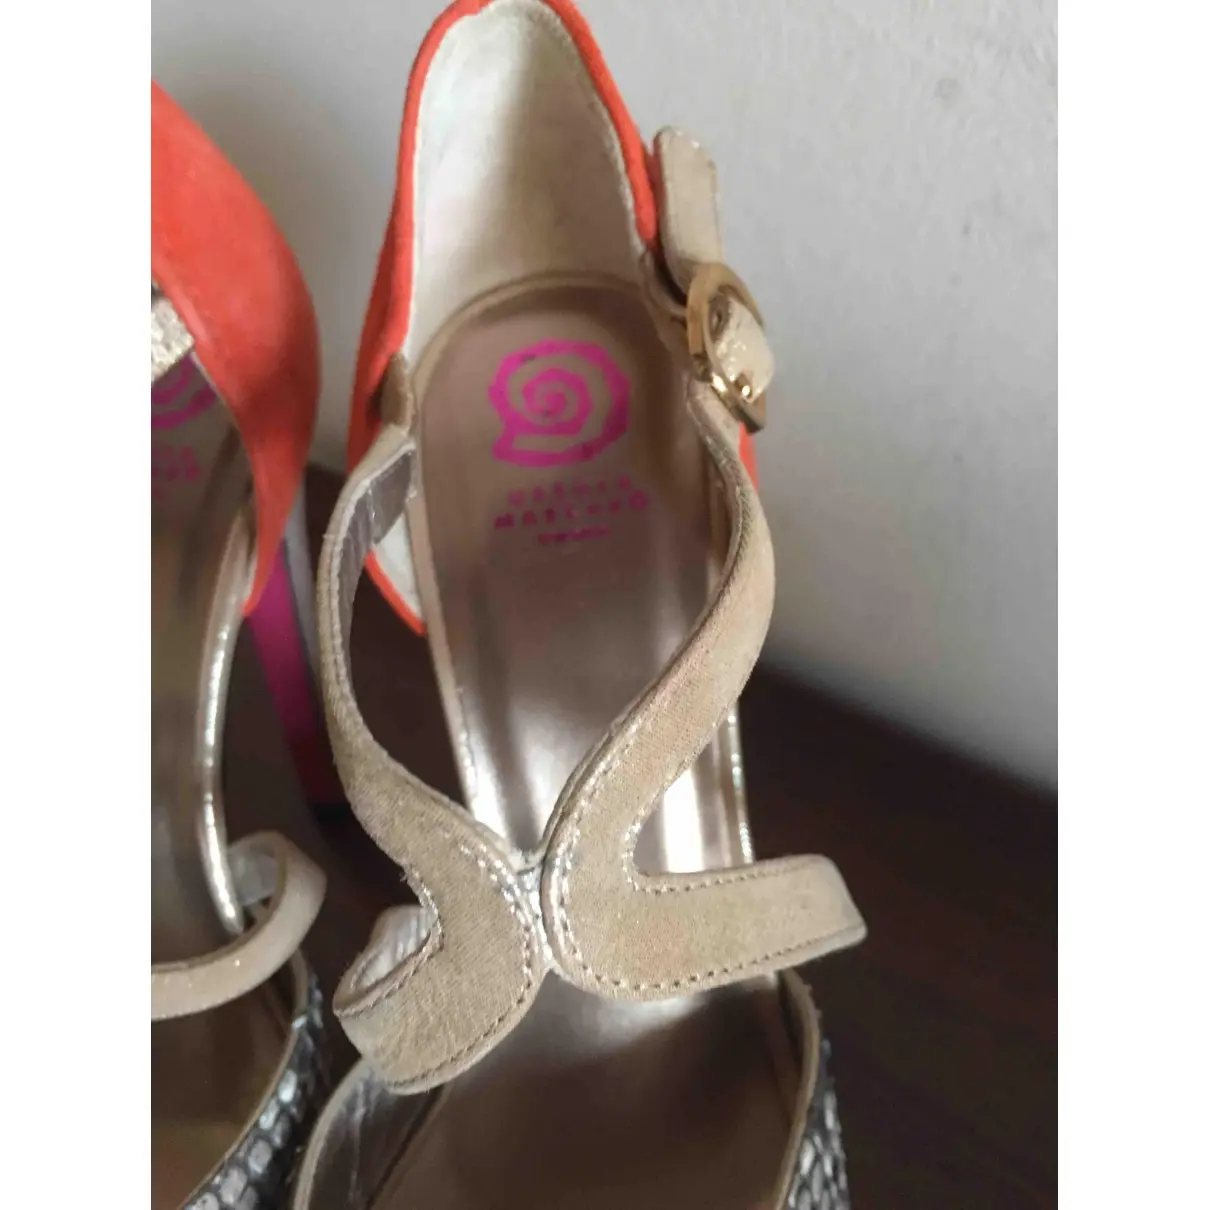 Buy Jaime Mascaro Leather heels online